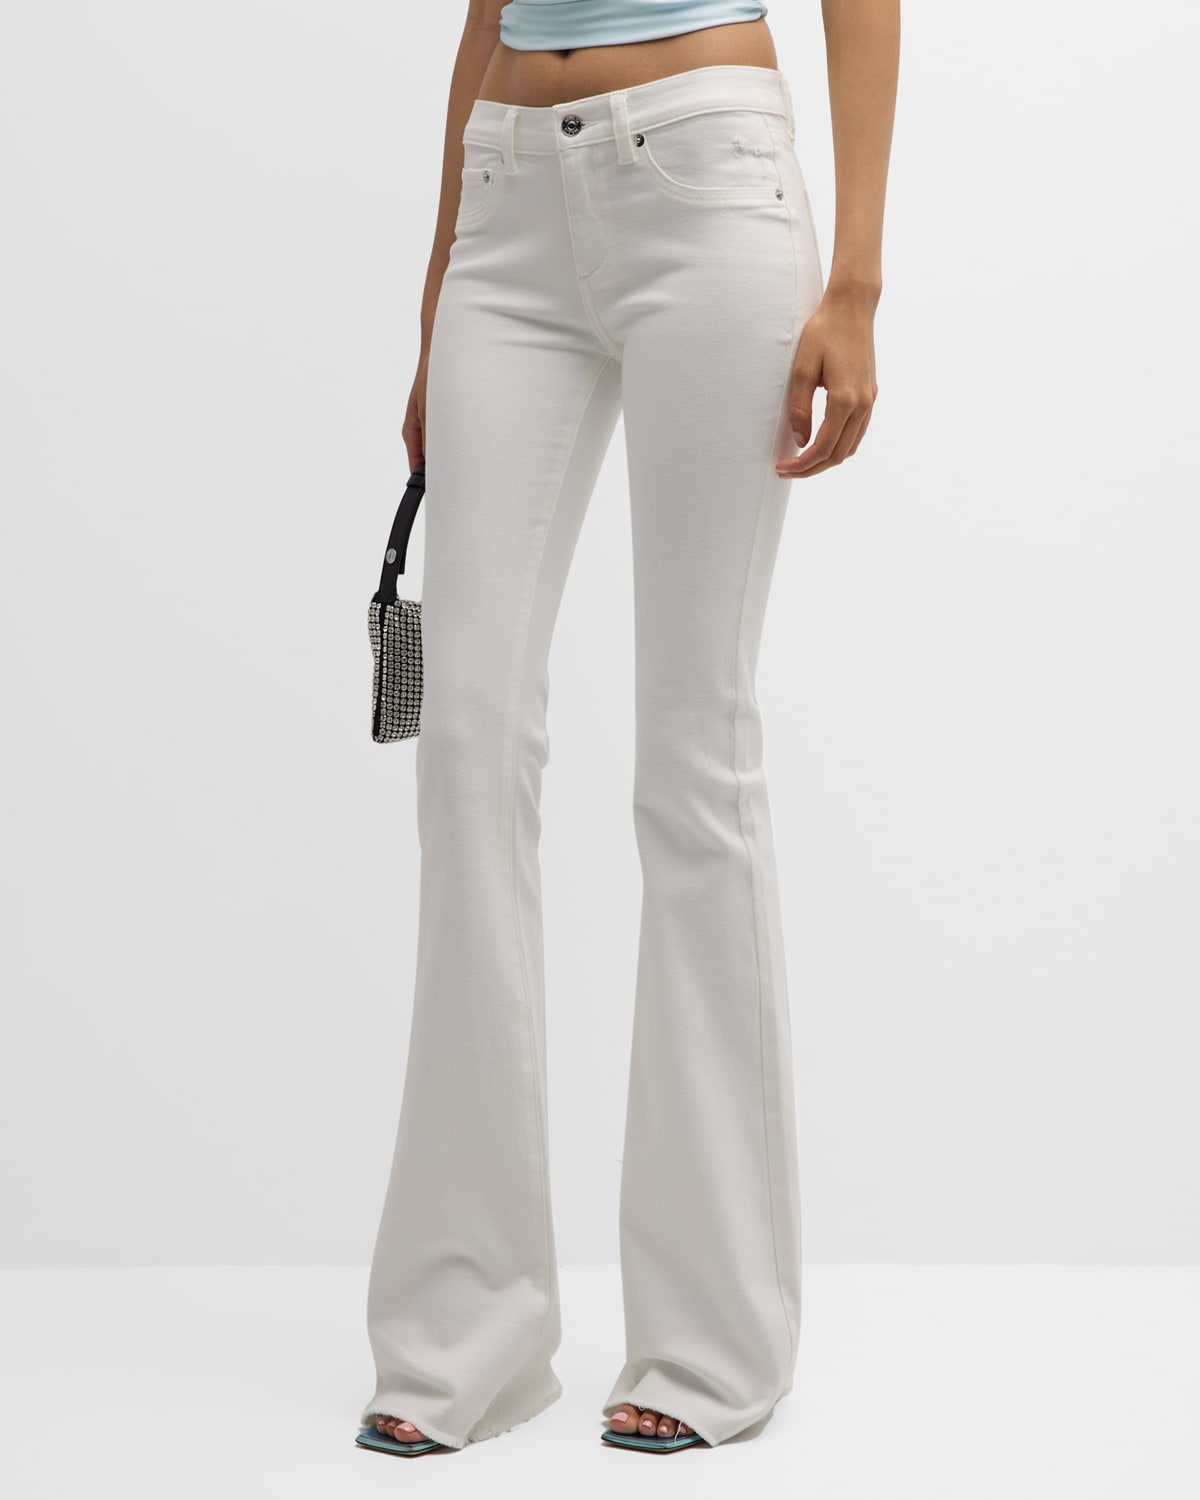 Ser.o.ya Demi Low-rise Bootcut Jeans In White